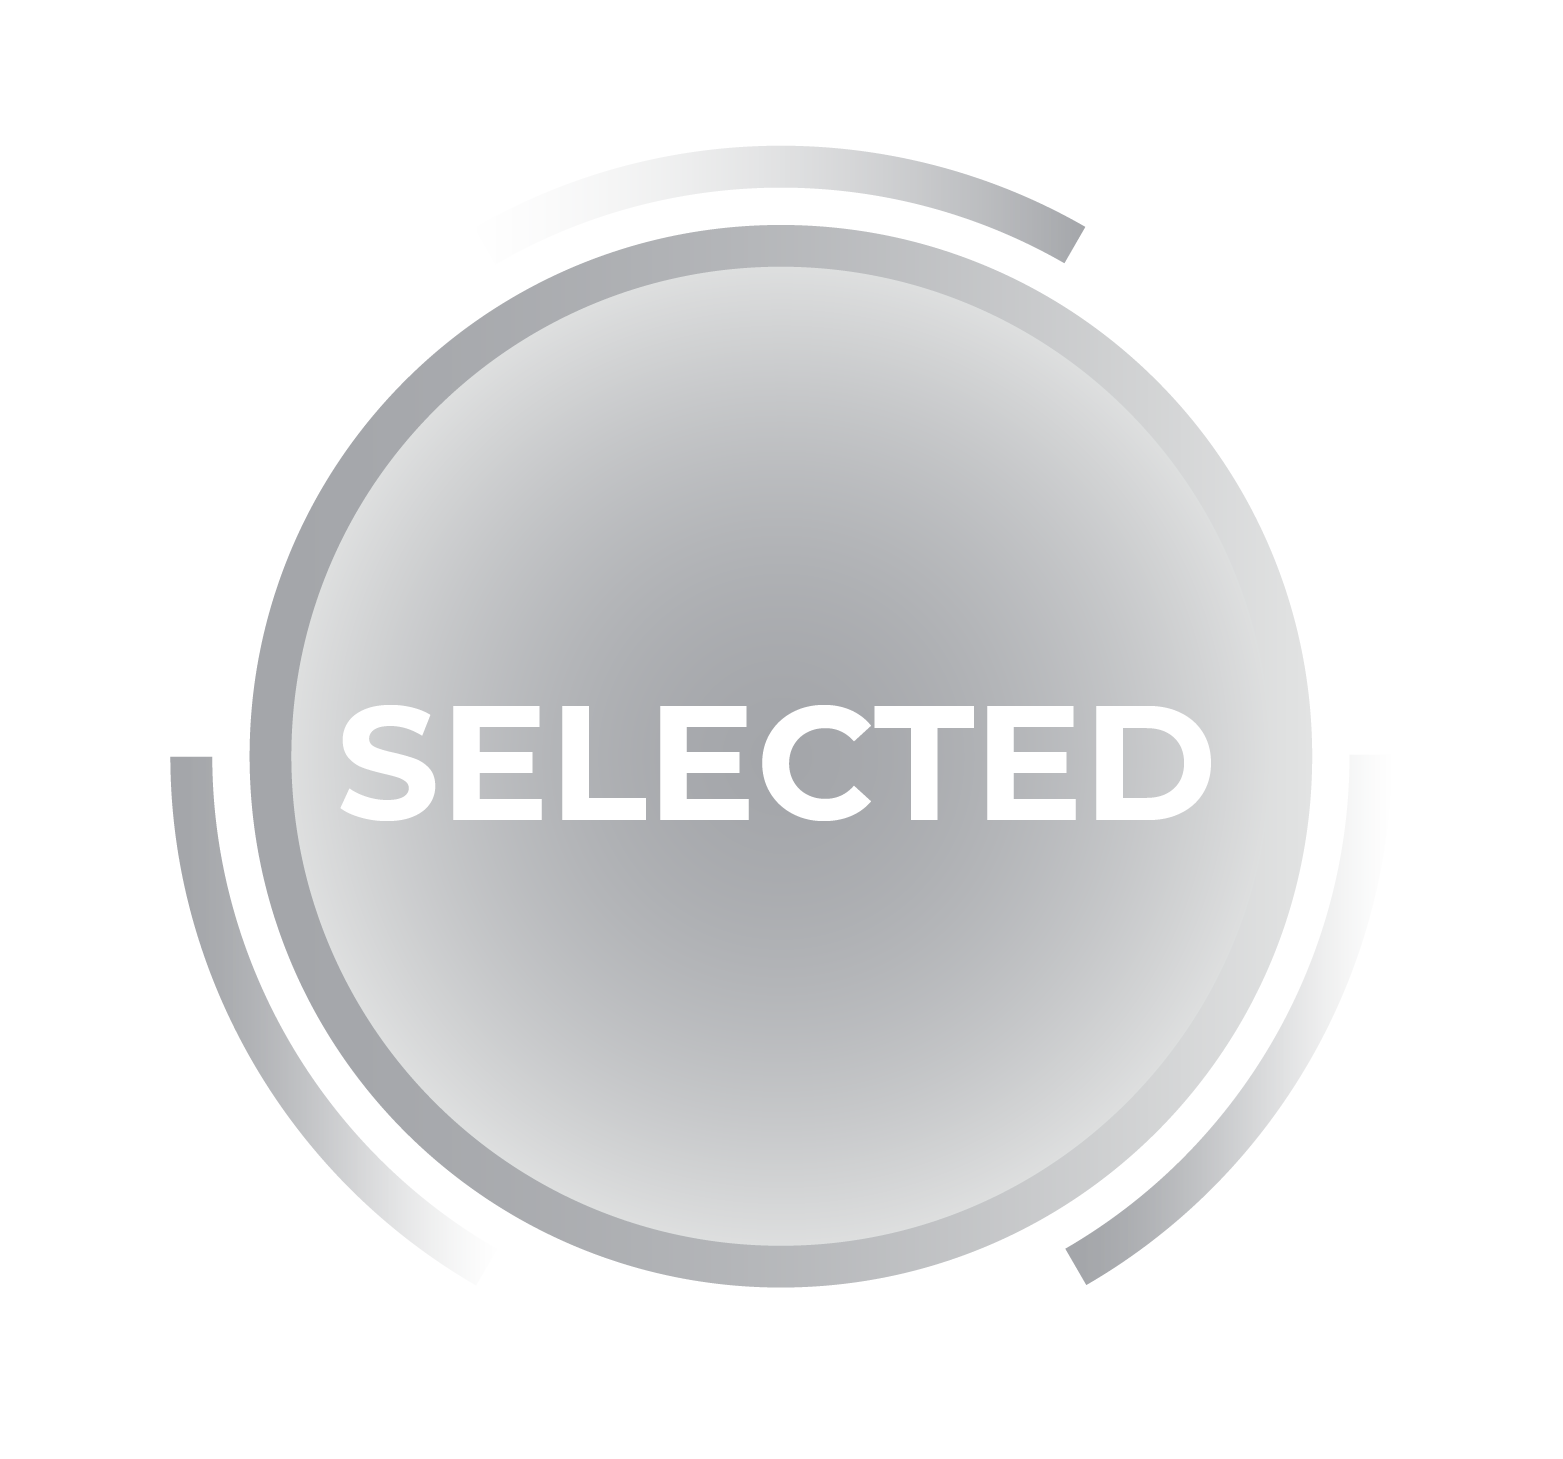 plusline-private-label-selected-button